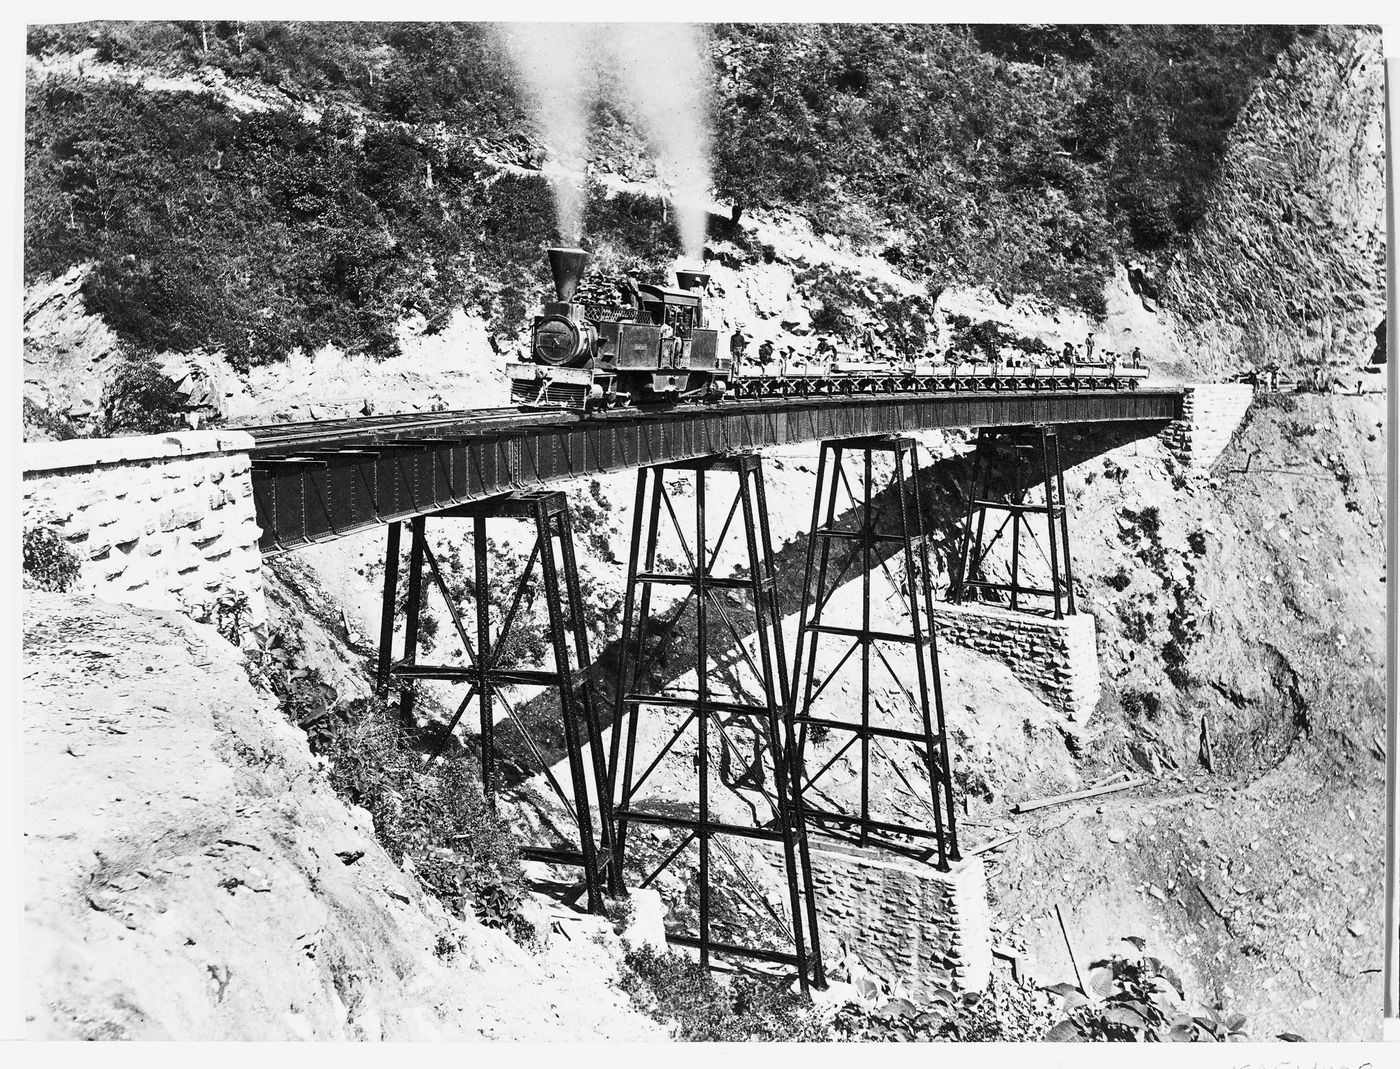 View of the Wimer railroad bridge in the Cumbres de Maltrata showing a locomotive and groups of men in railway wagons, Veracruz-Llave, Mexico